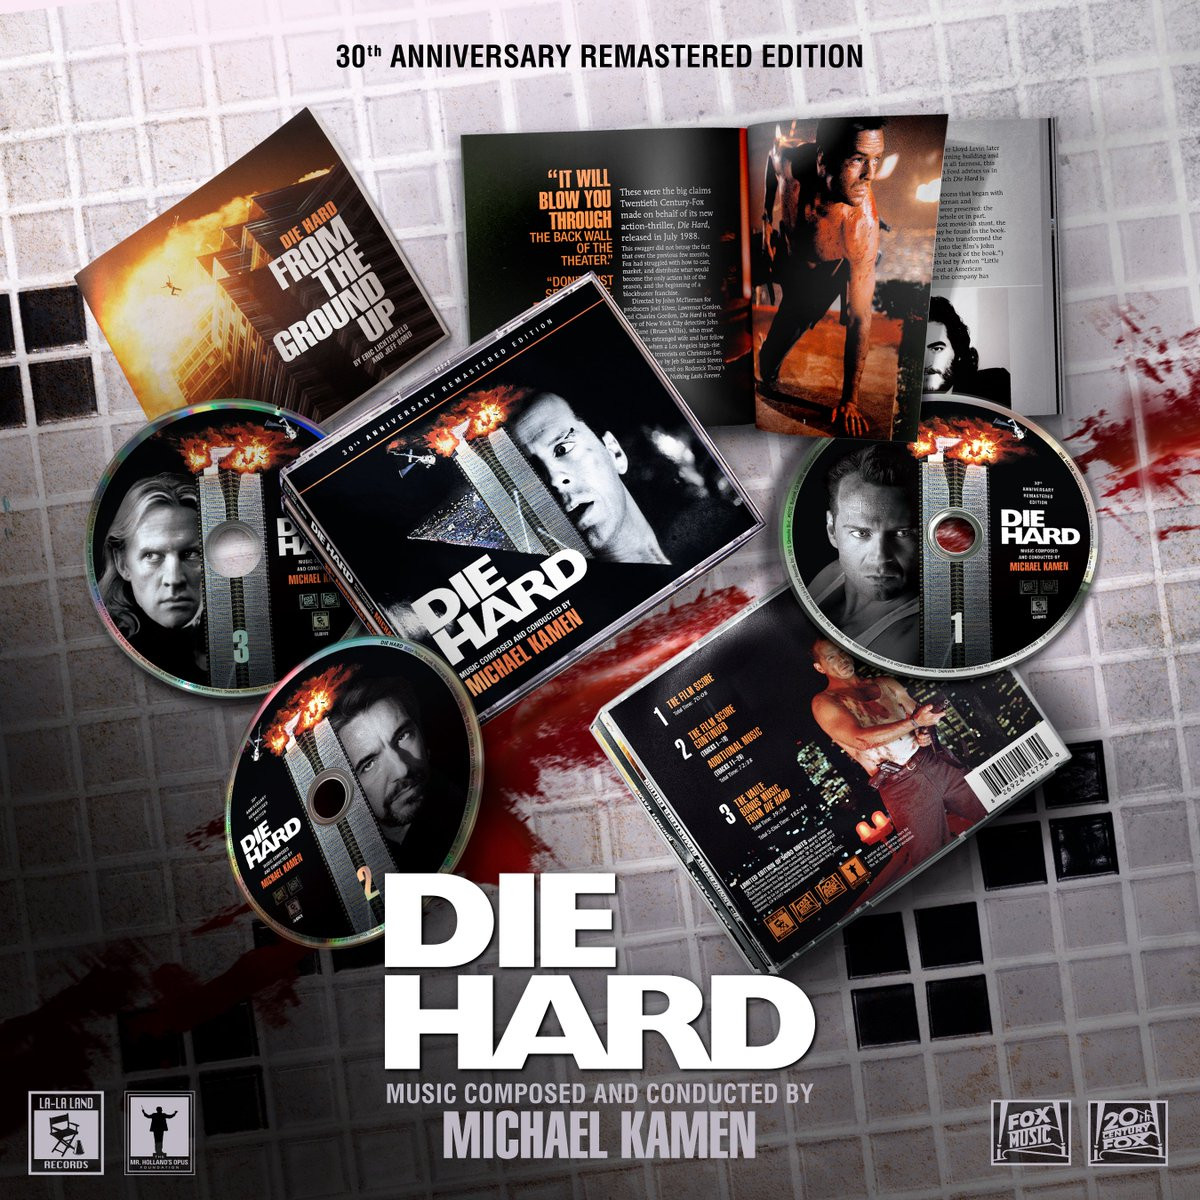 Die Hard 3xCD 30th Anniversary Edition (presentation image)